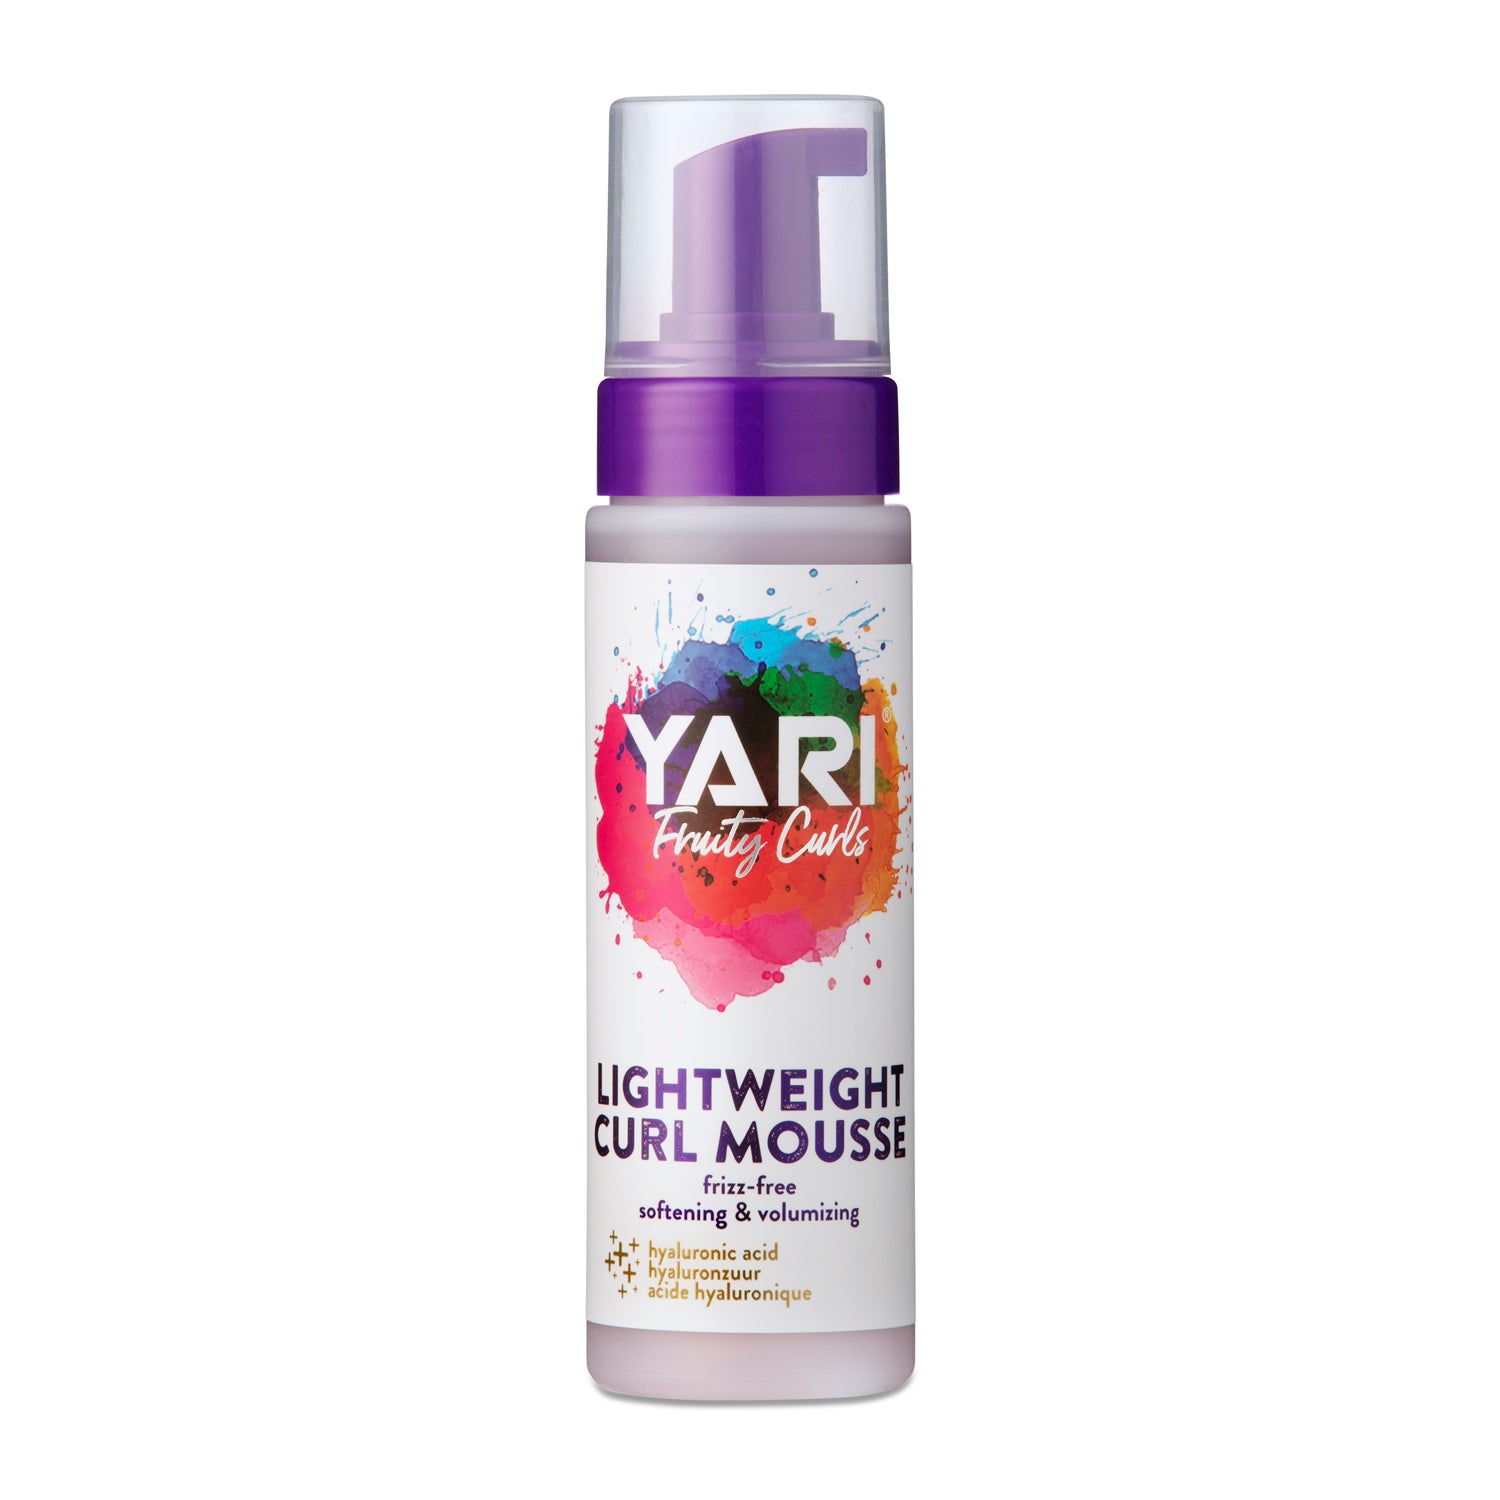 Yari Fruity Curls - Lightweight Curl Mousse 220ml